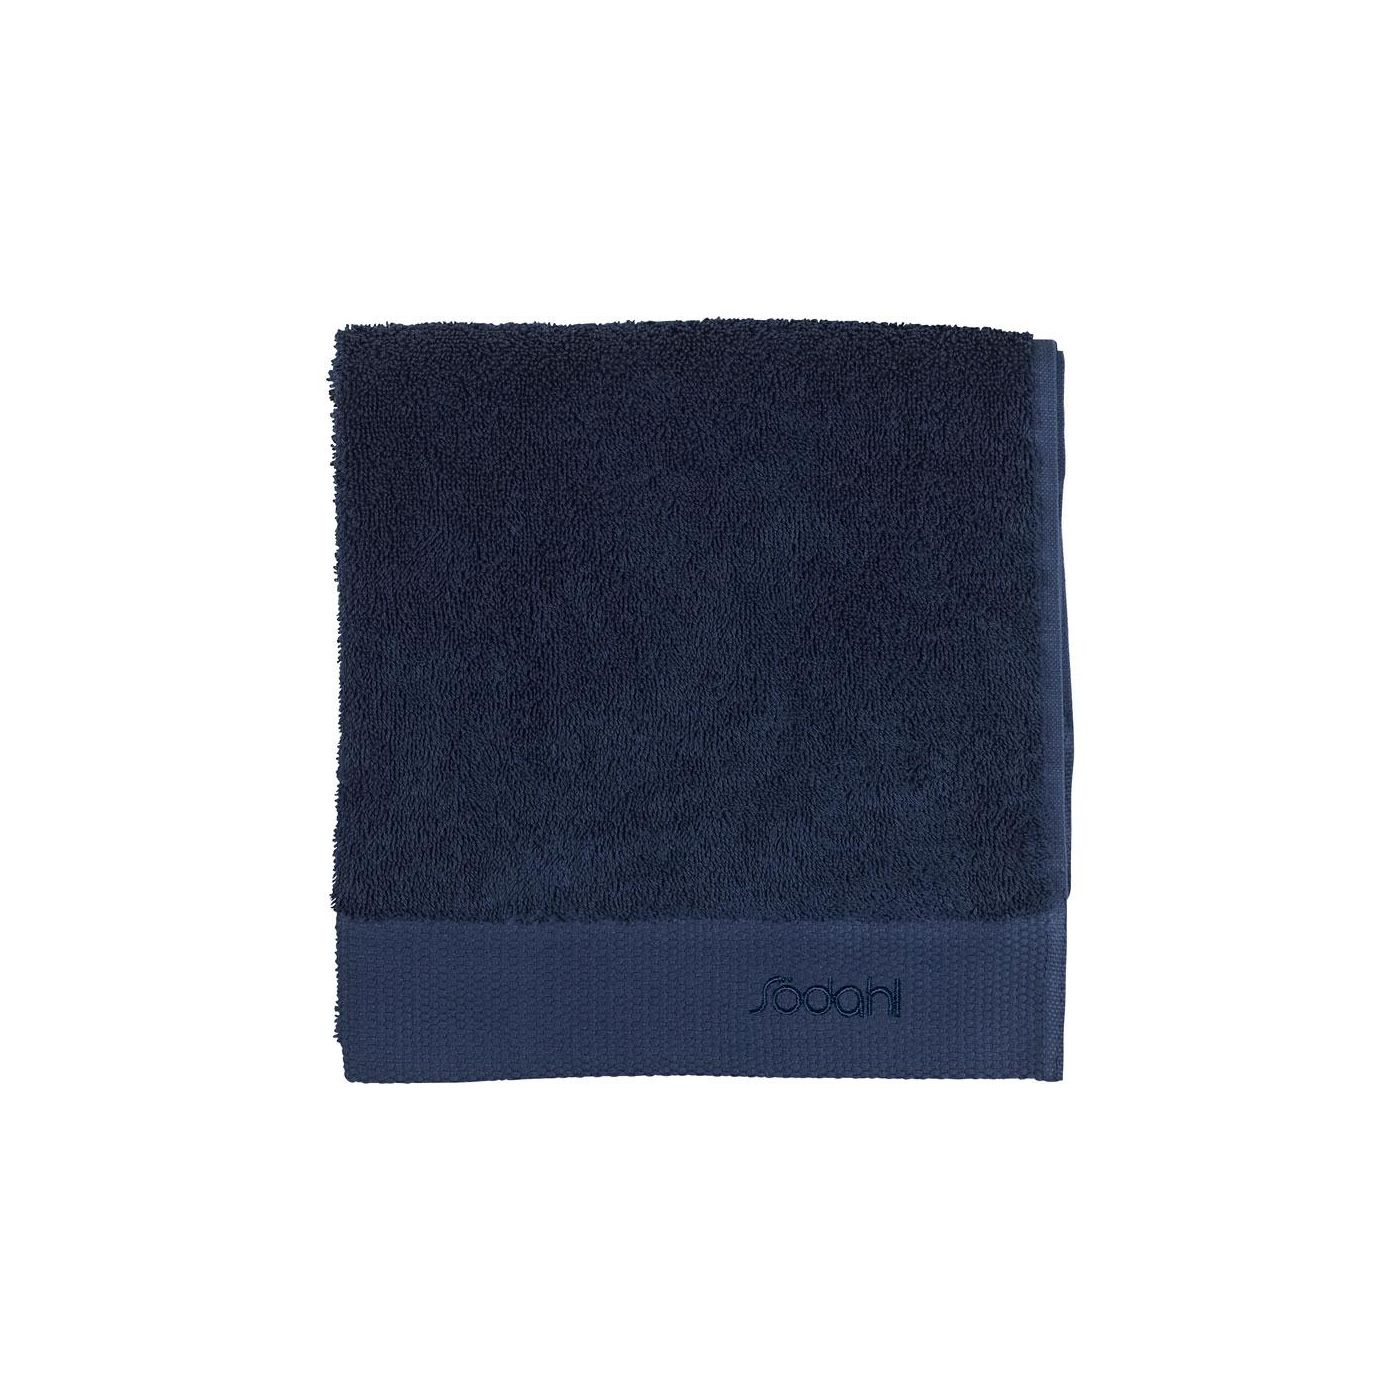 Södahl handdoek 40x60 cm comfort indigo